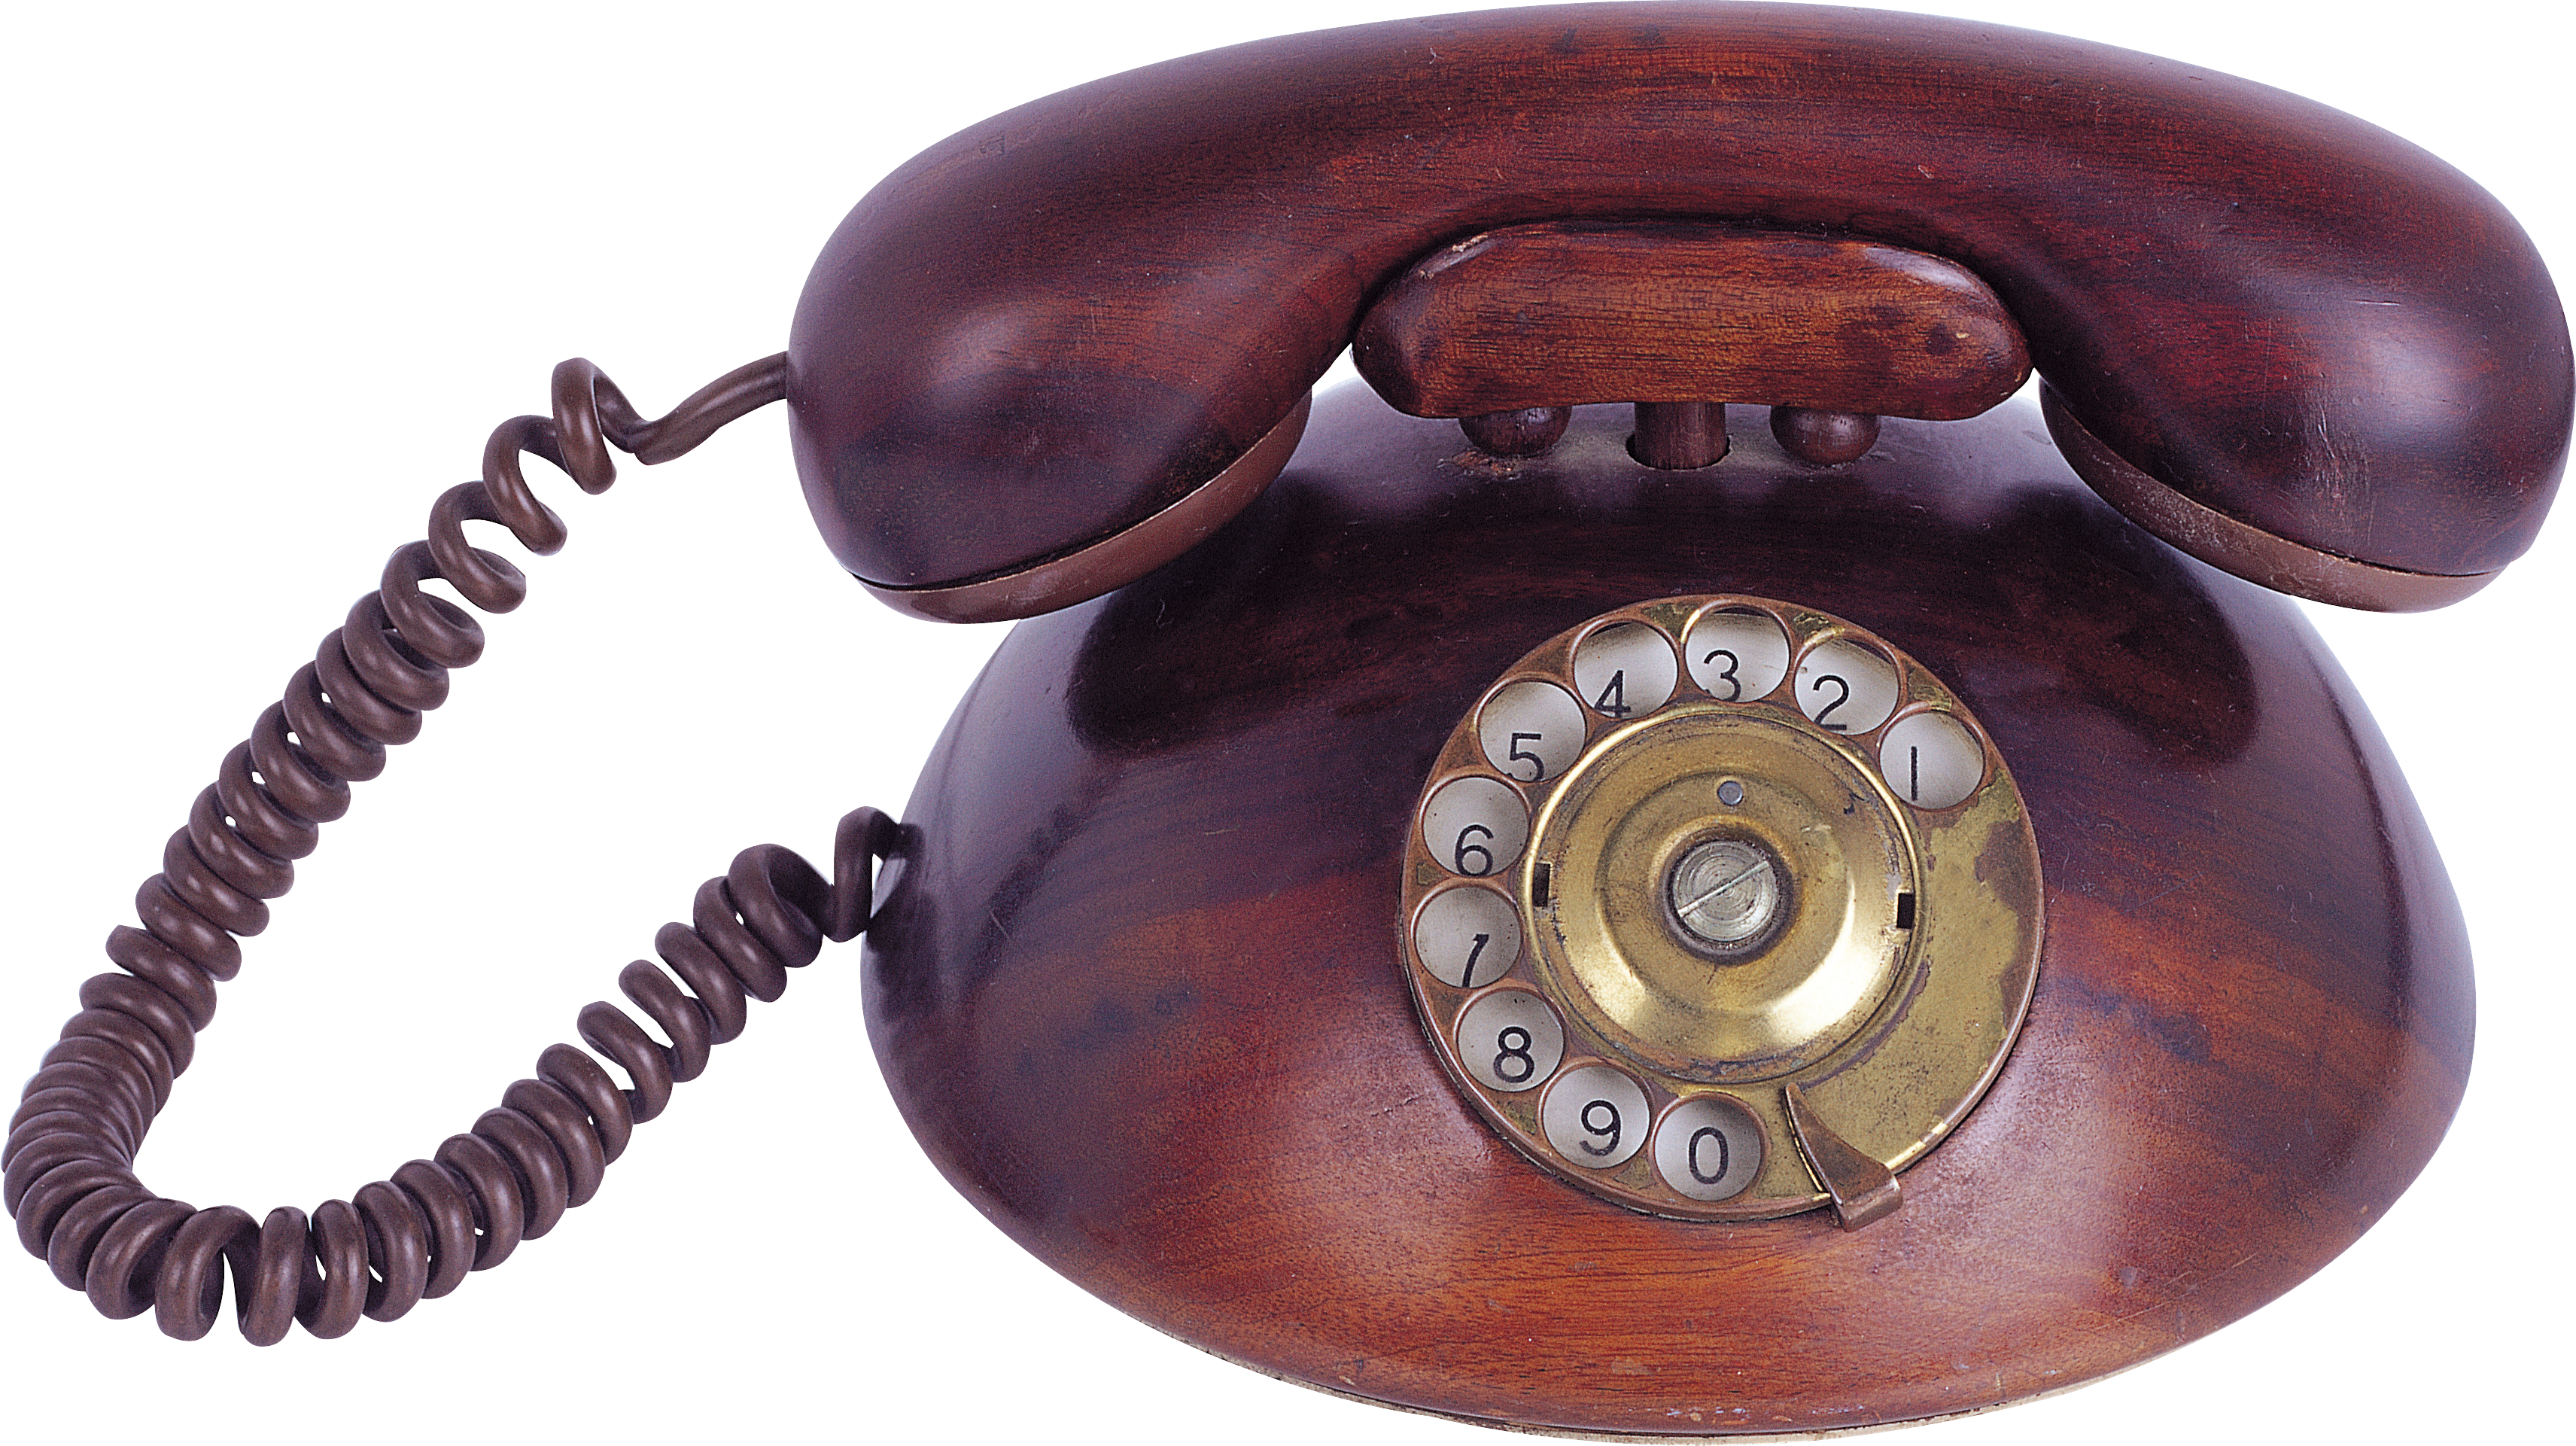 Telefone velho